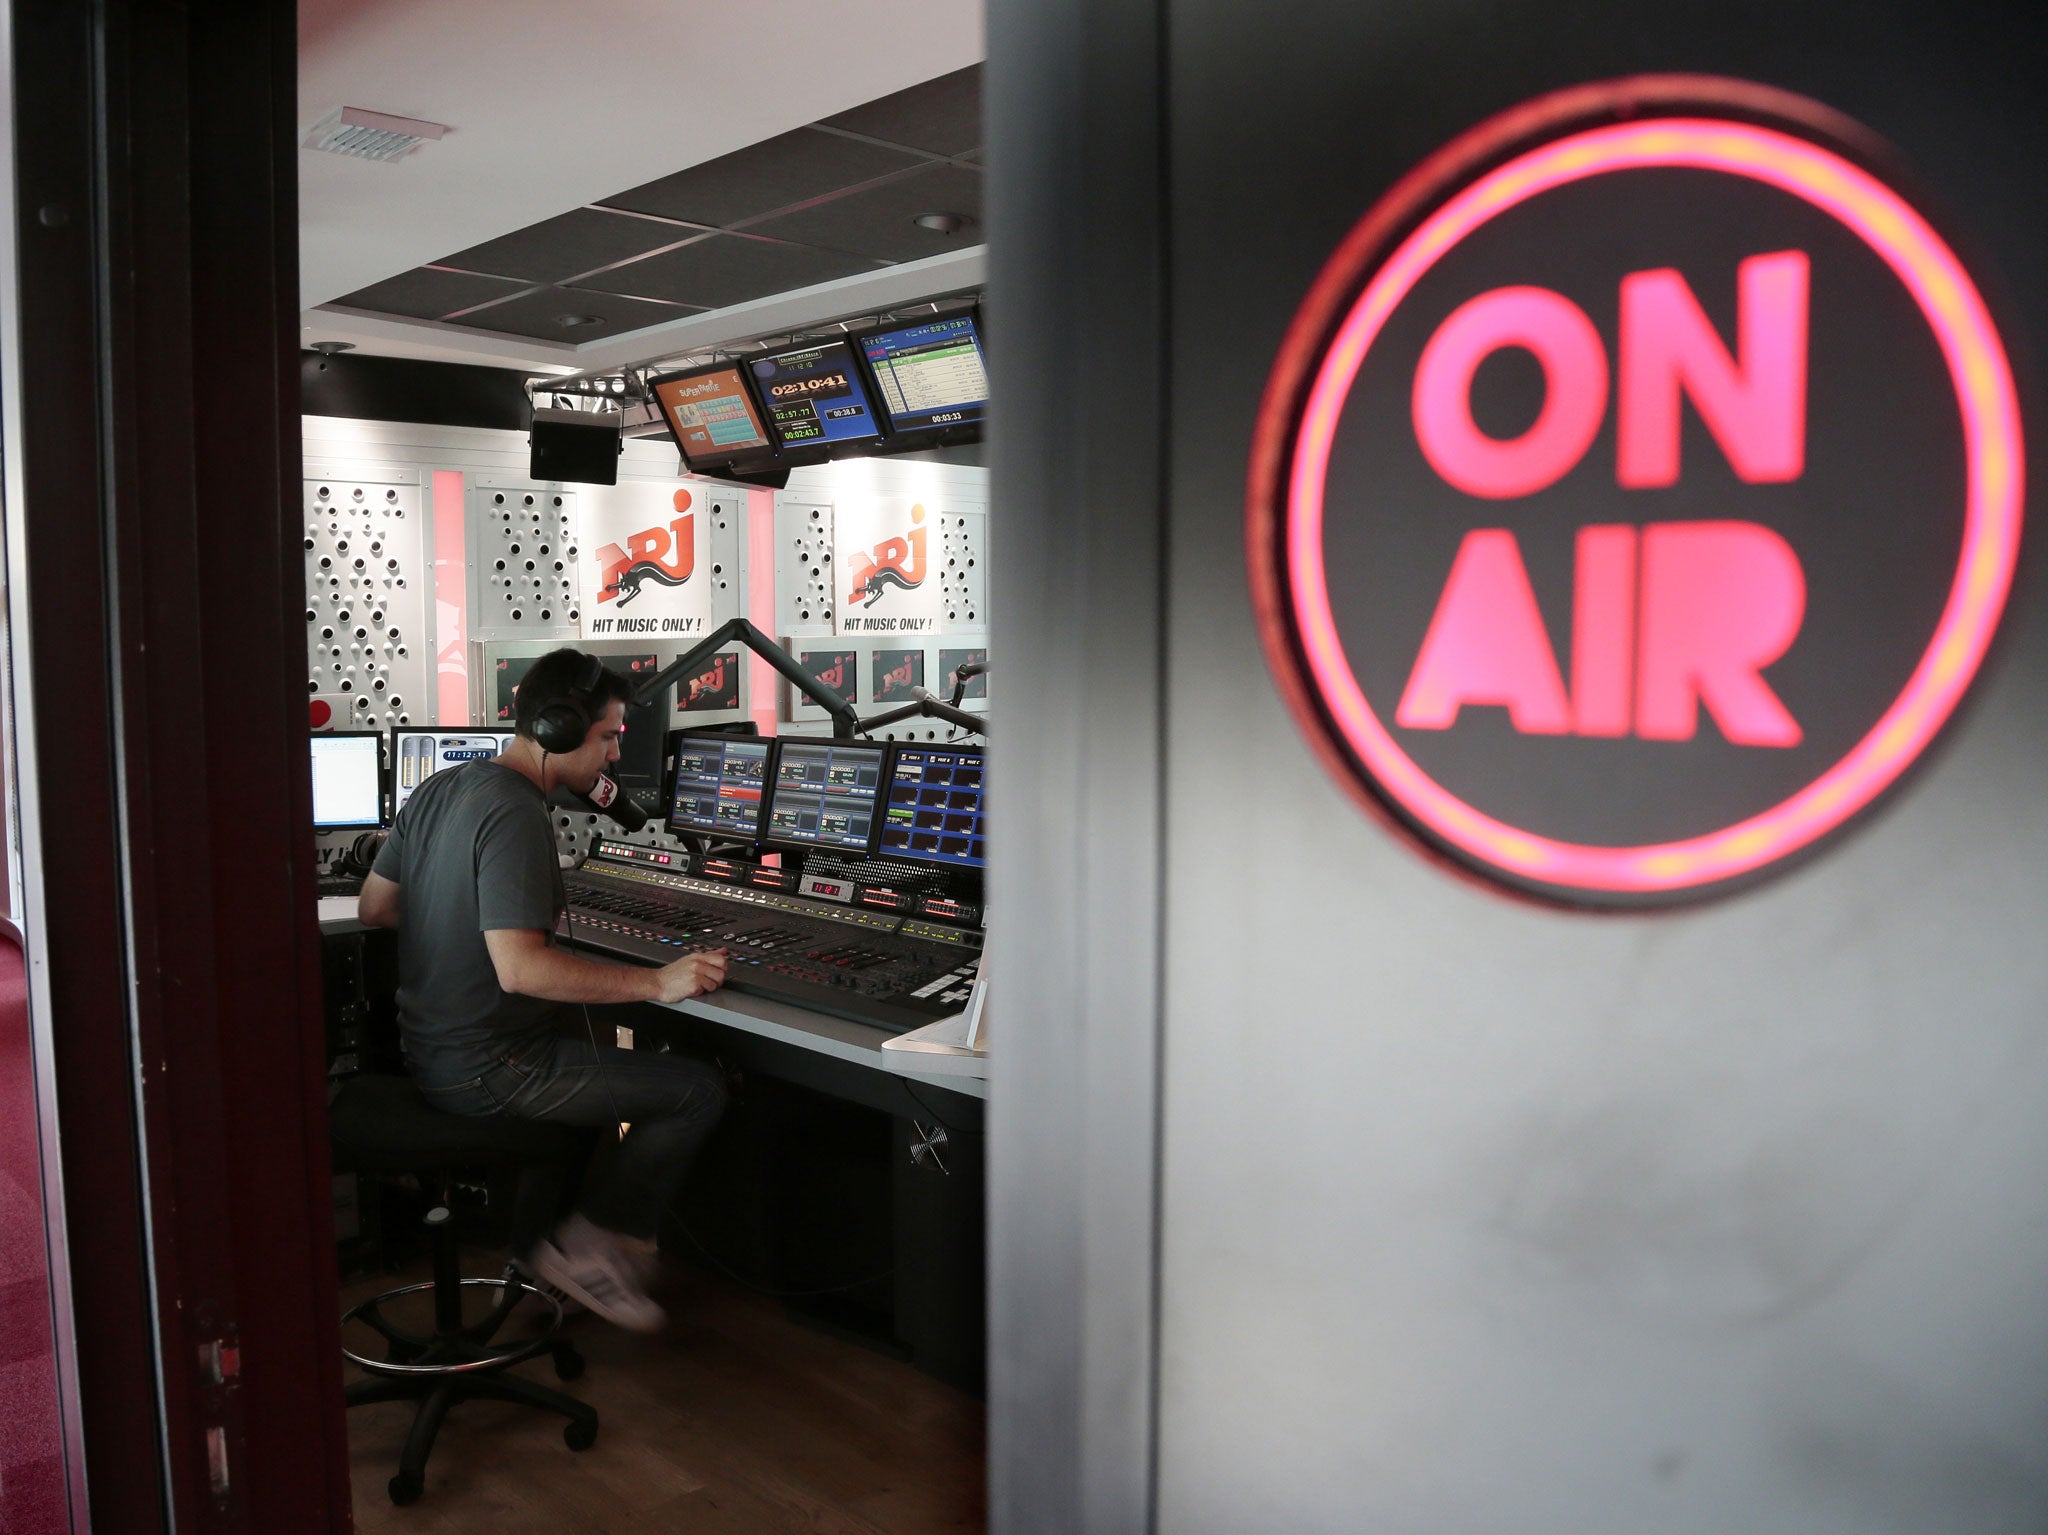 Norway is getting rid of FM radio